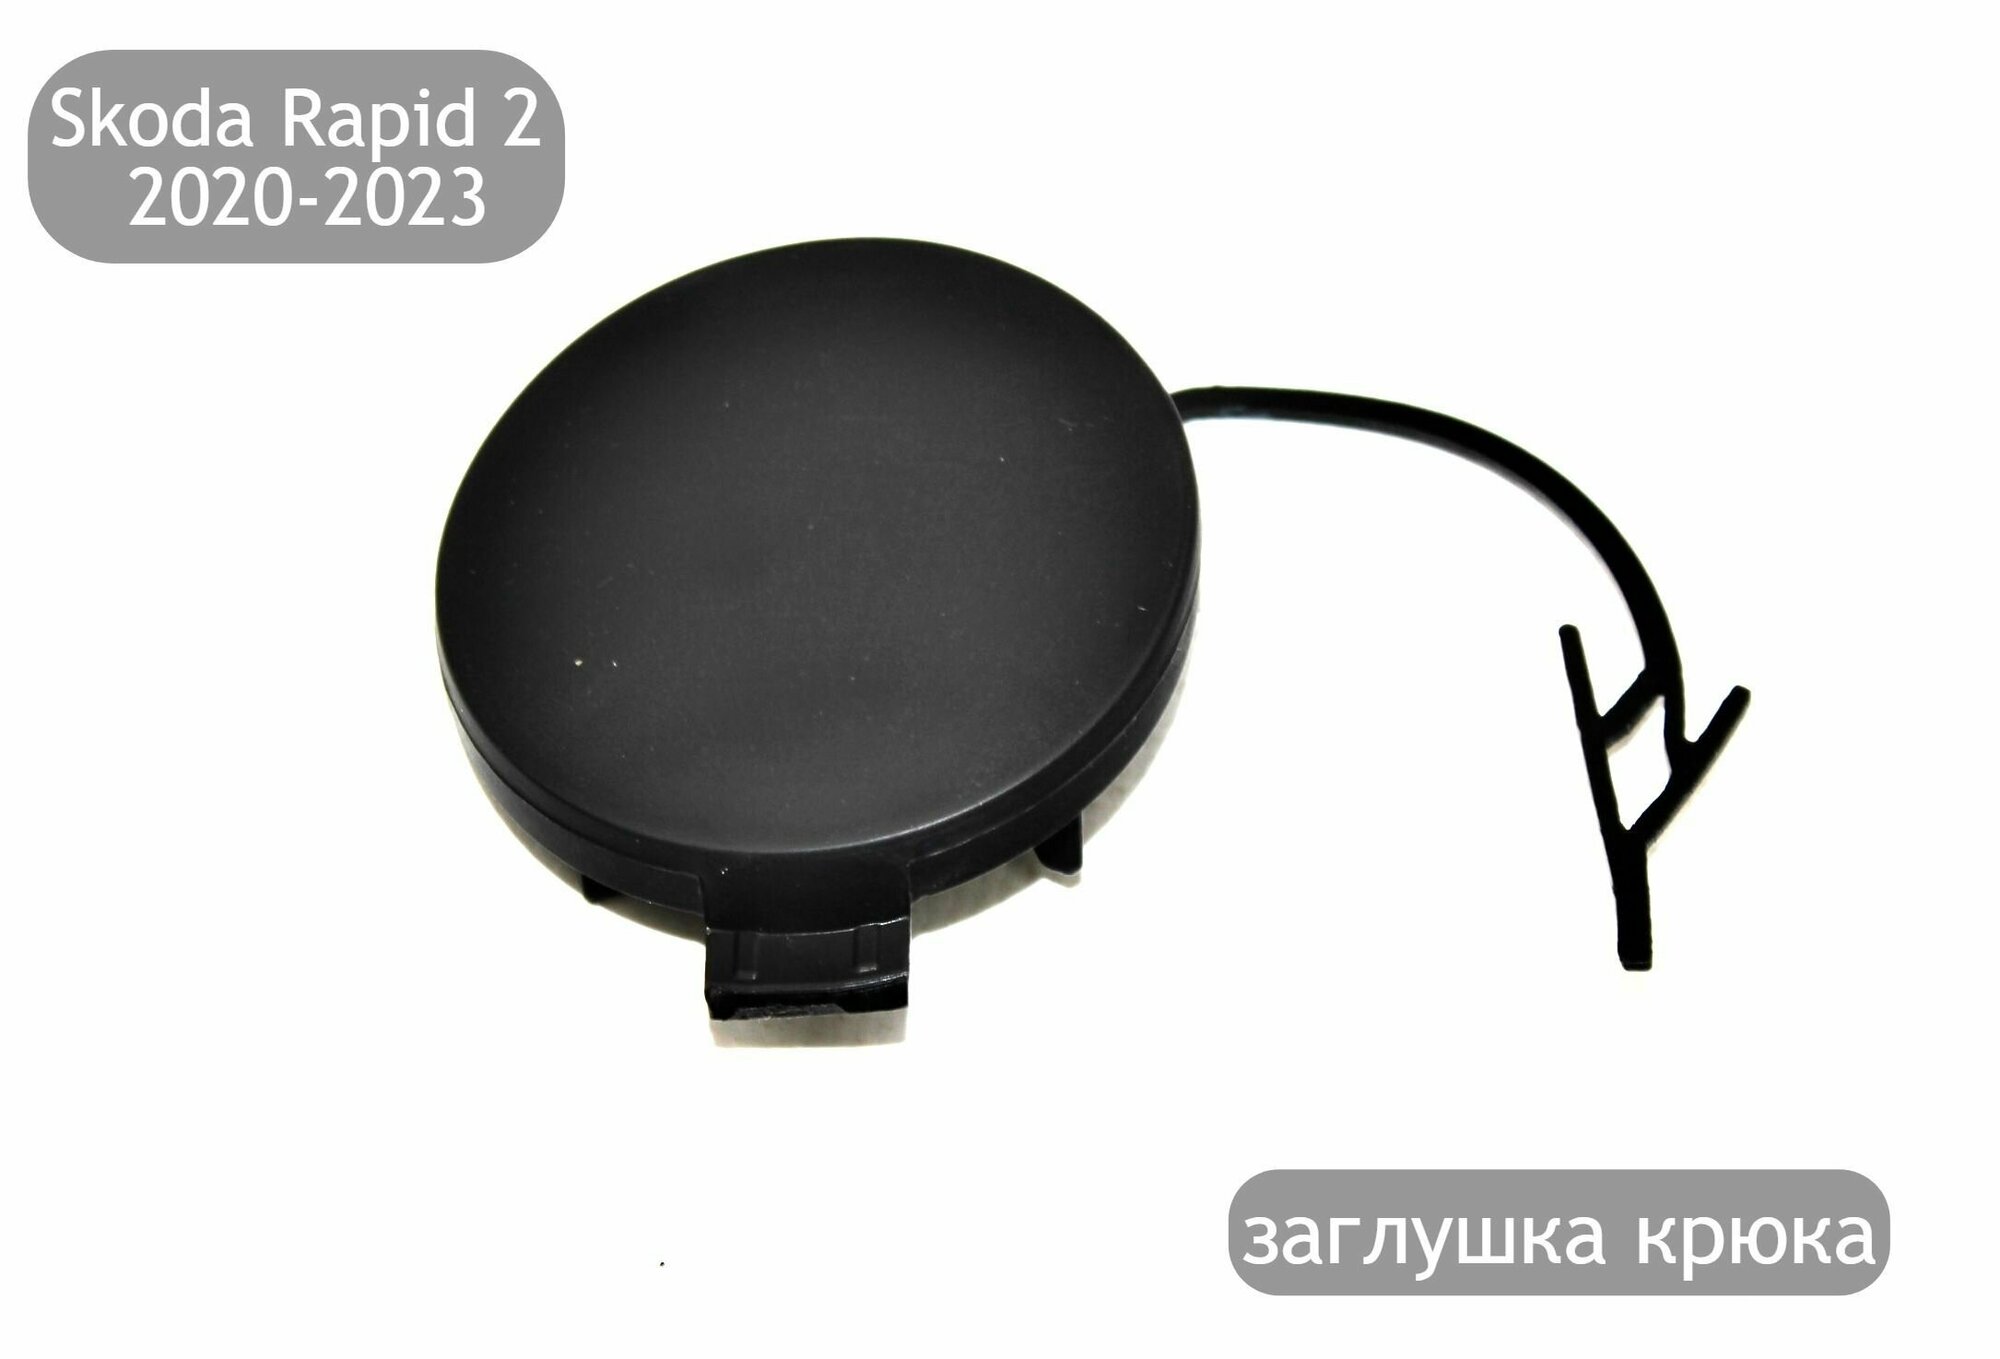 Заглушка буксировочного крюка для Skoda Rapid 2 2020-2023